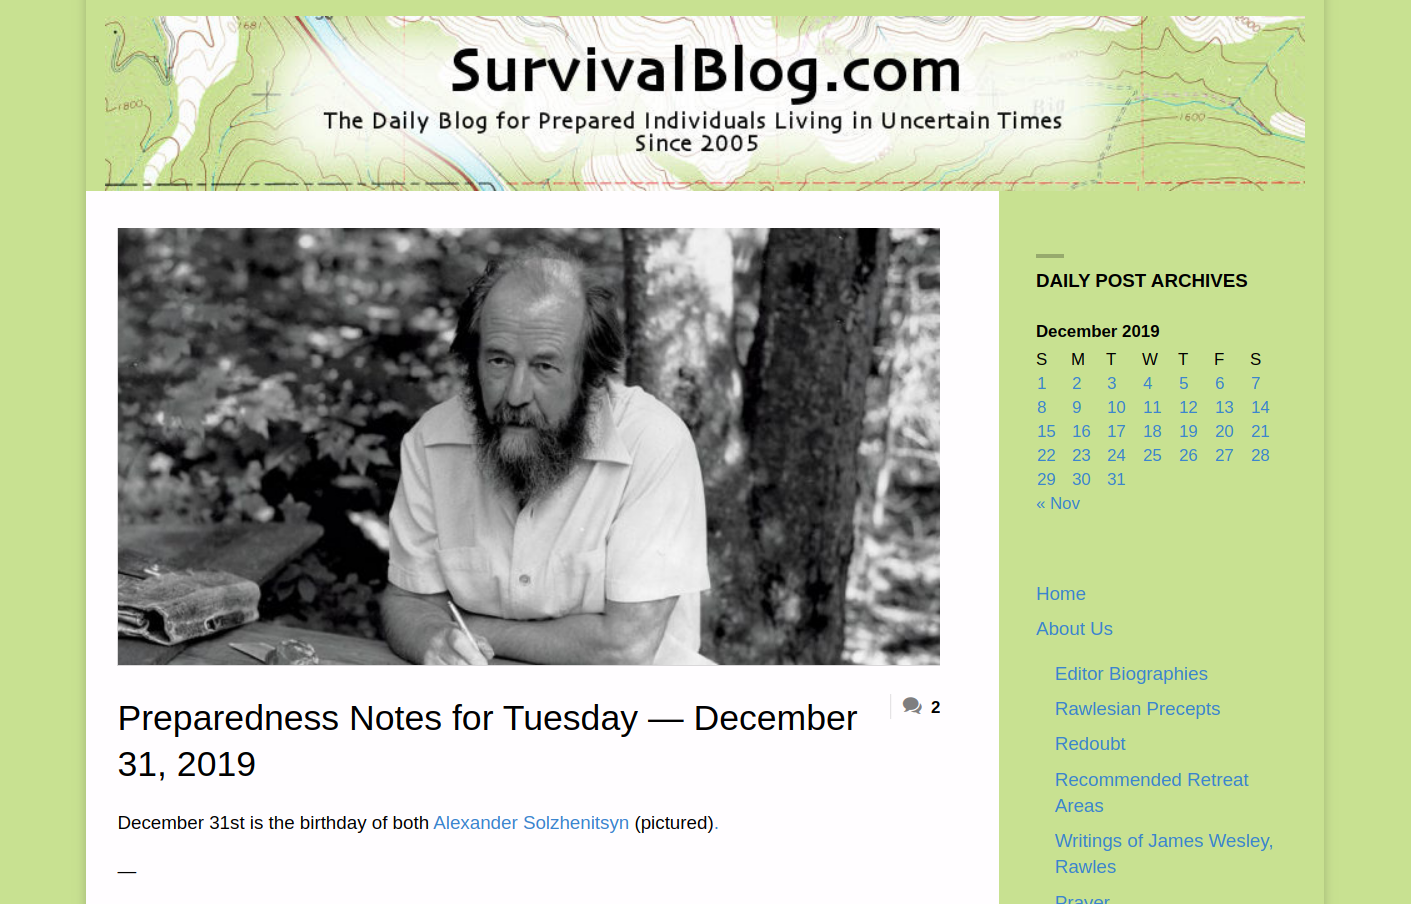 survivalblog.com